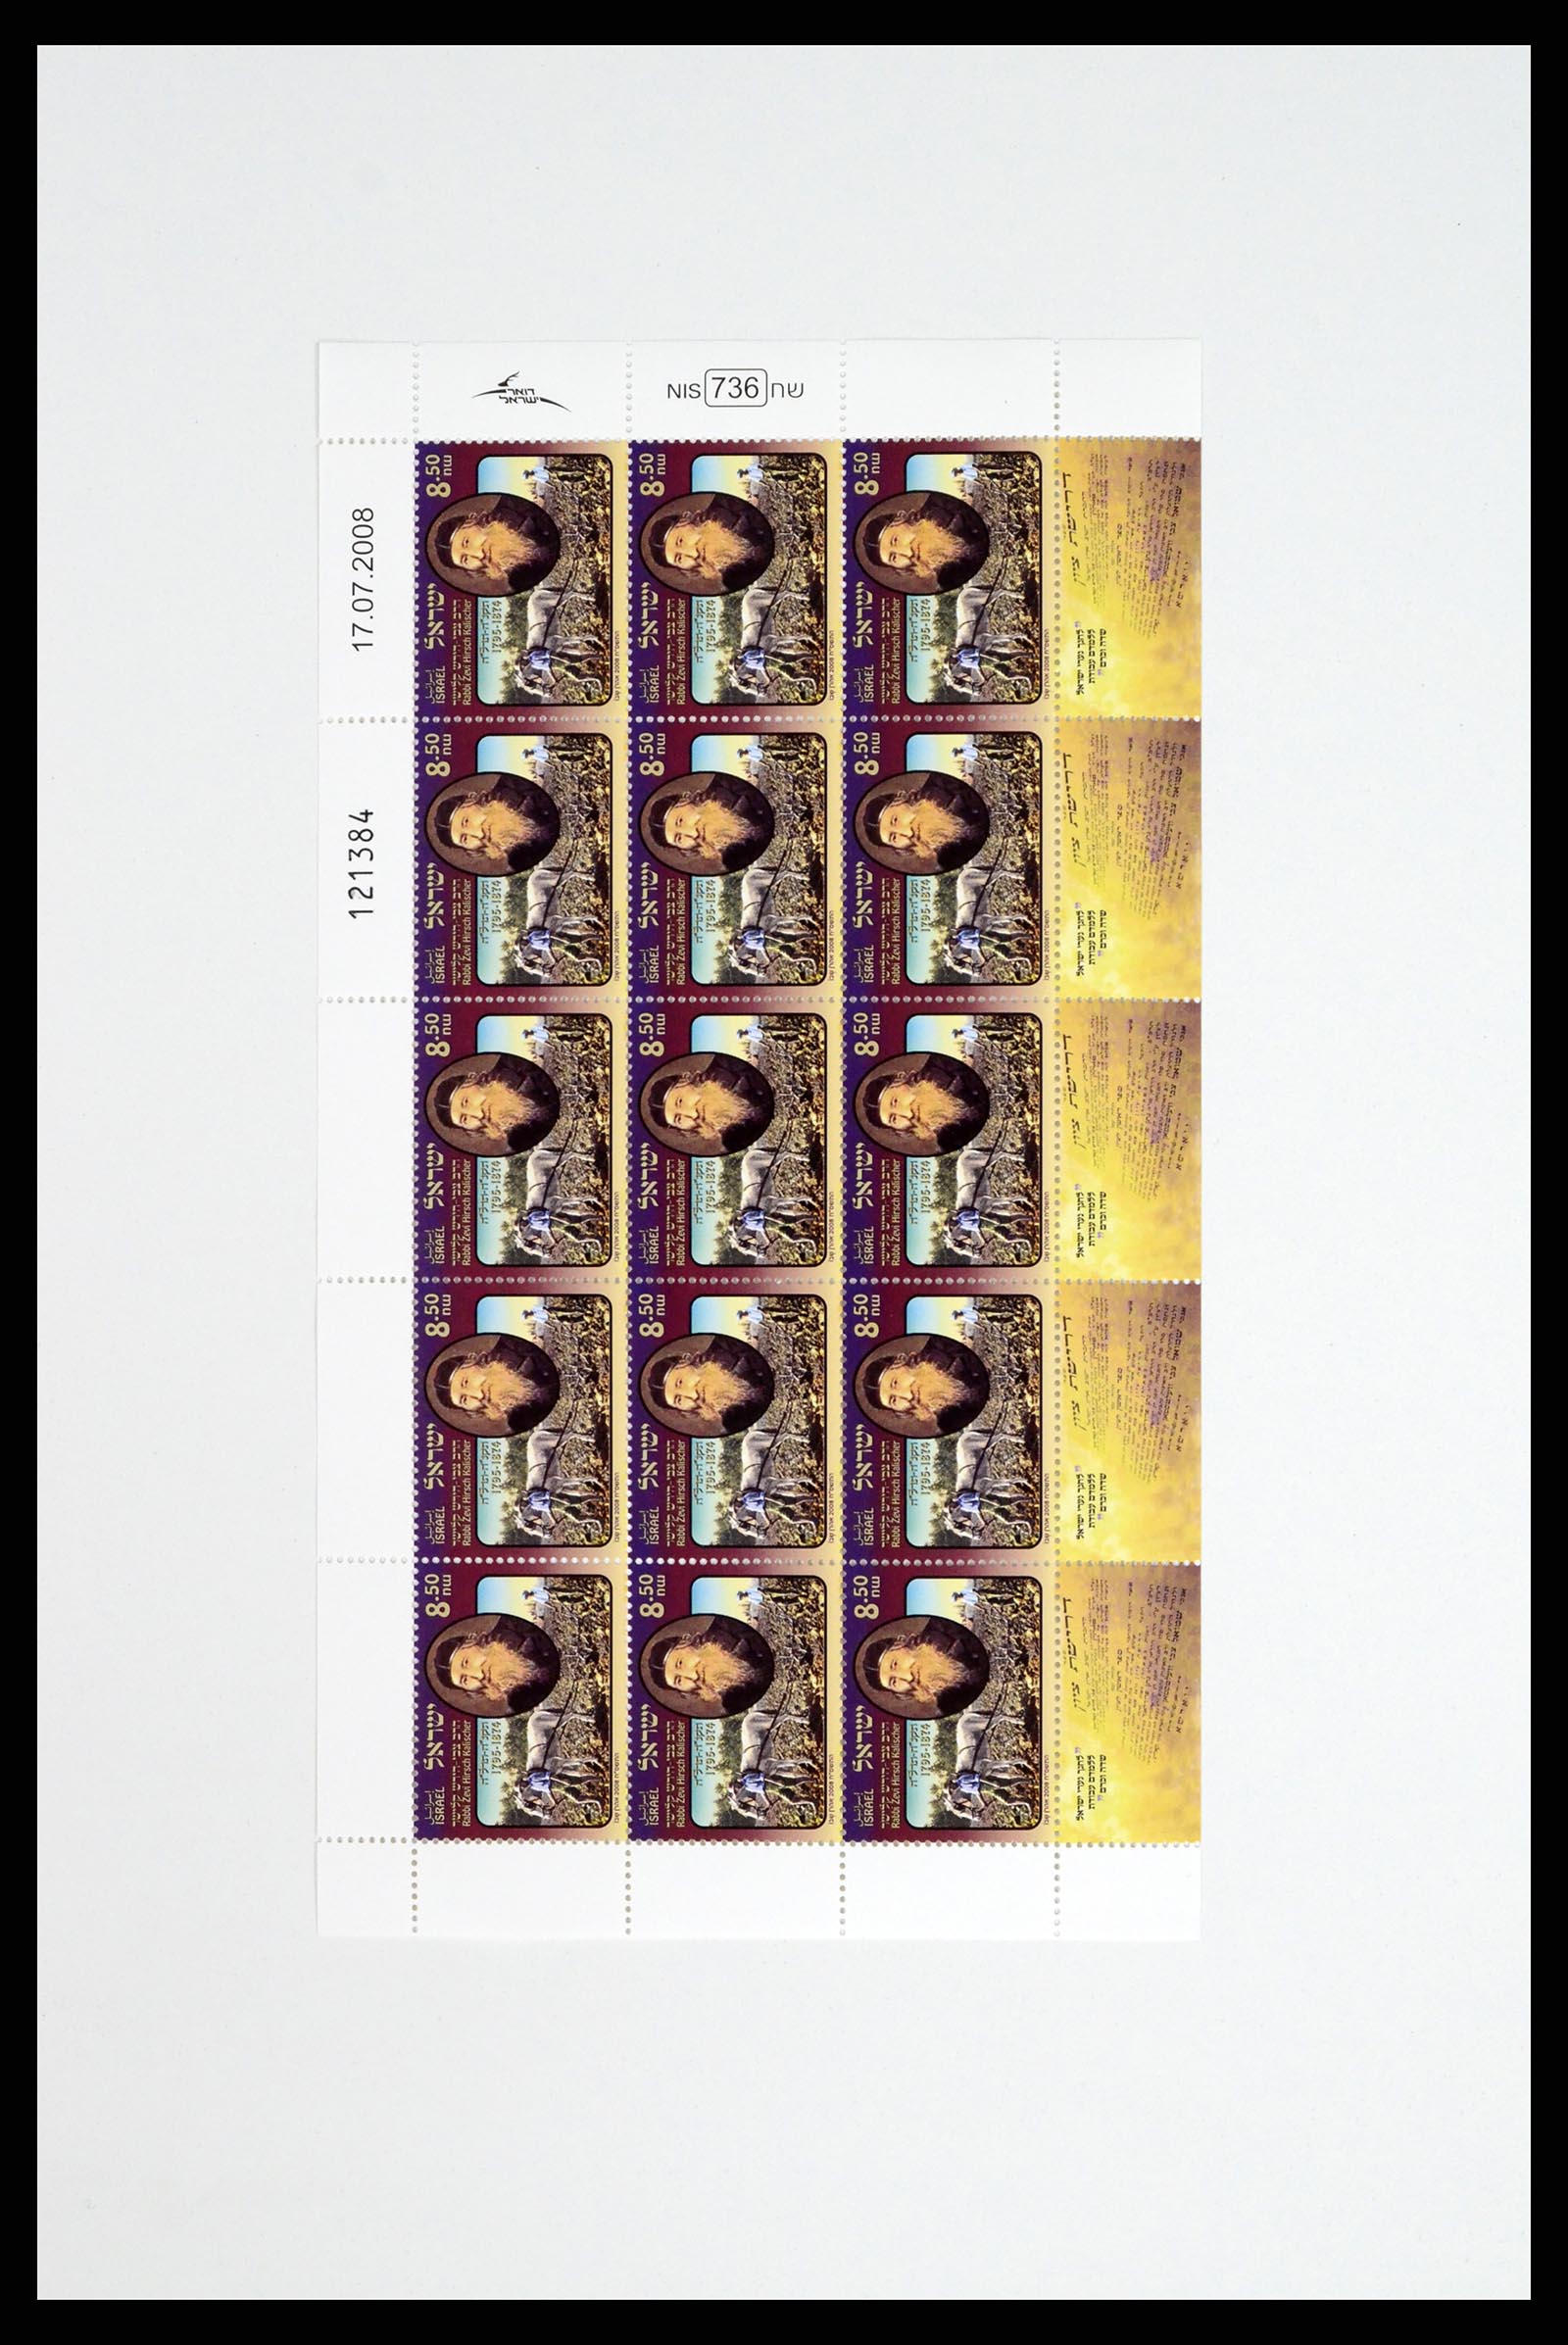 37779 072 - Stamp collection 37779 Israel sheetlets 1986-2009.